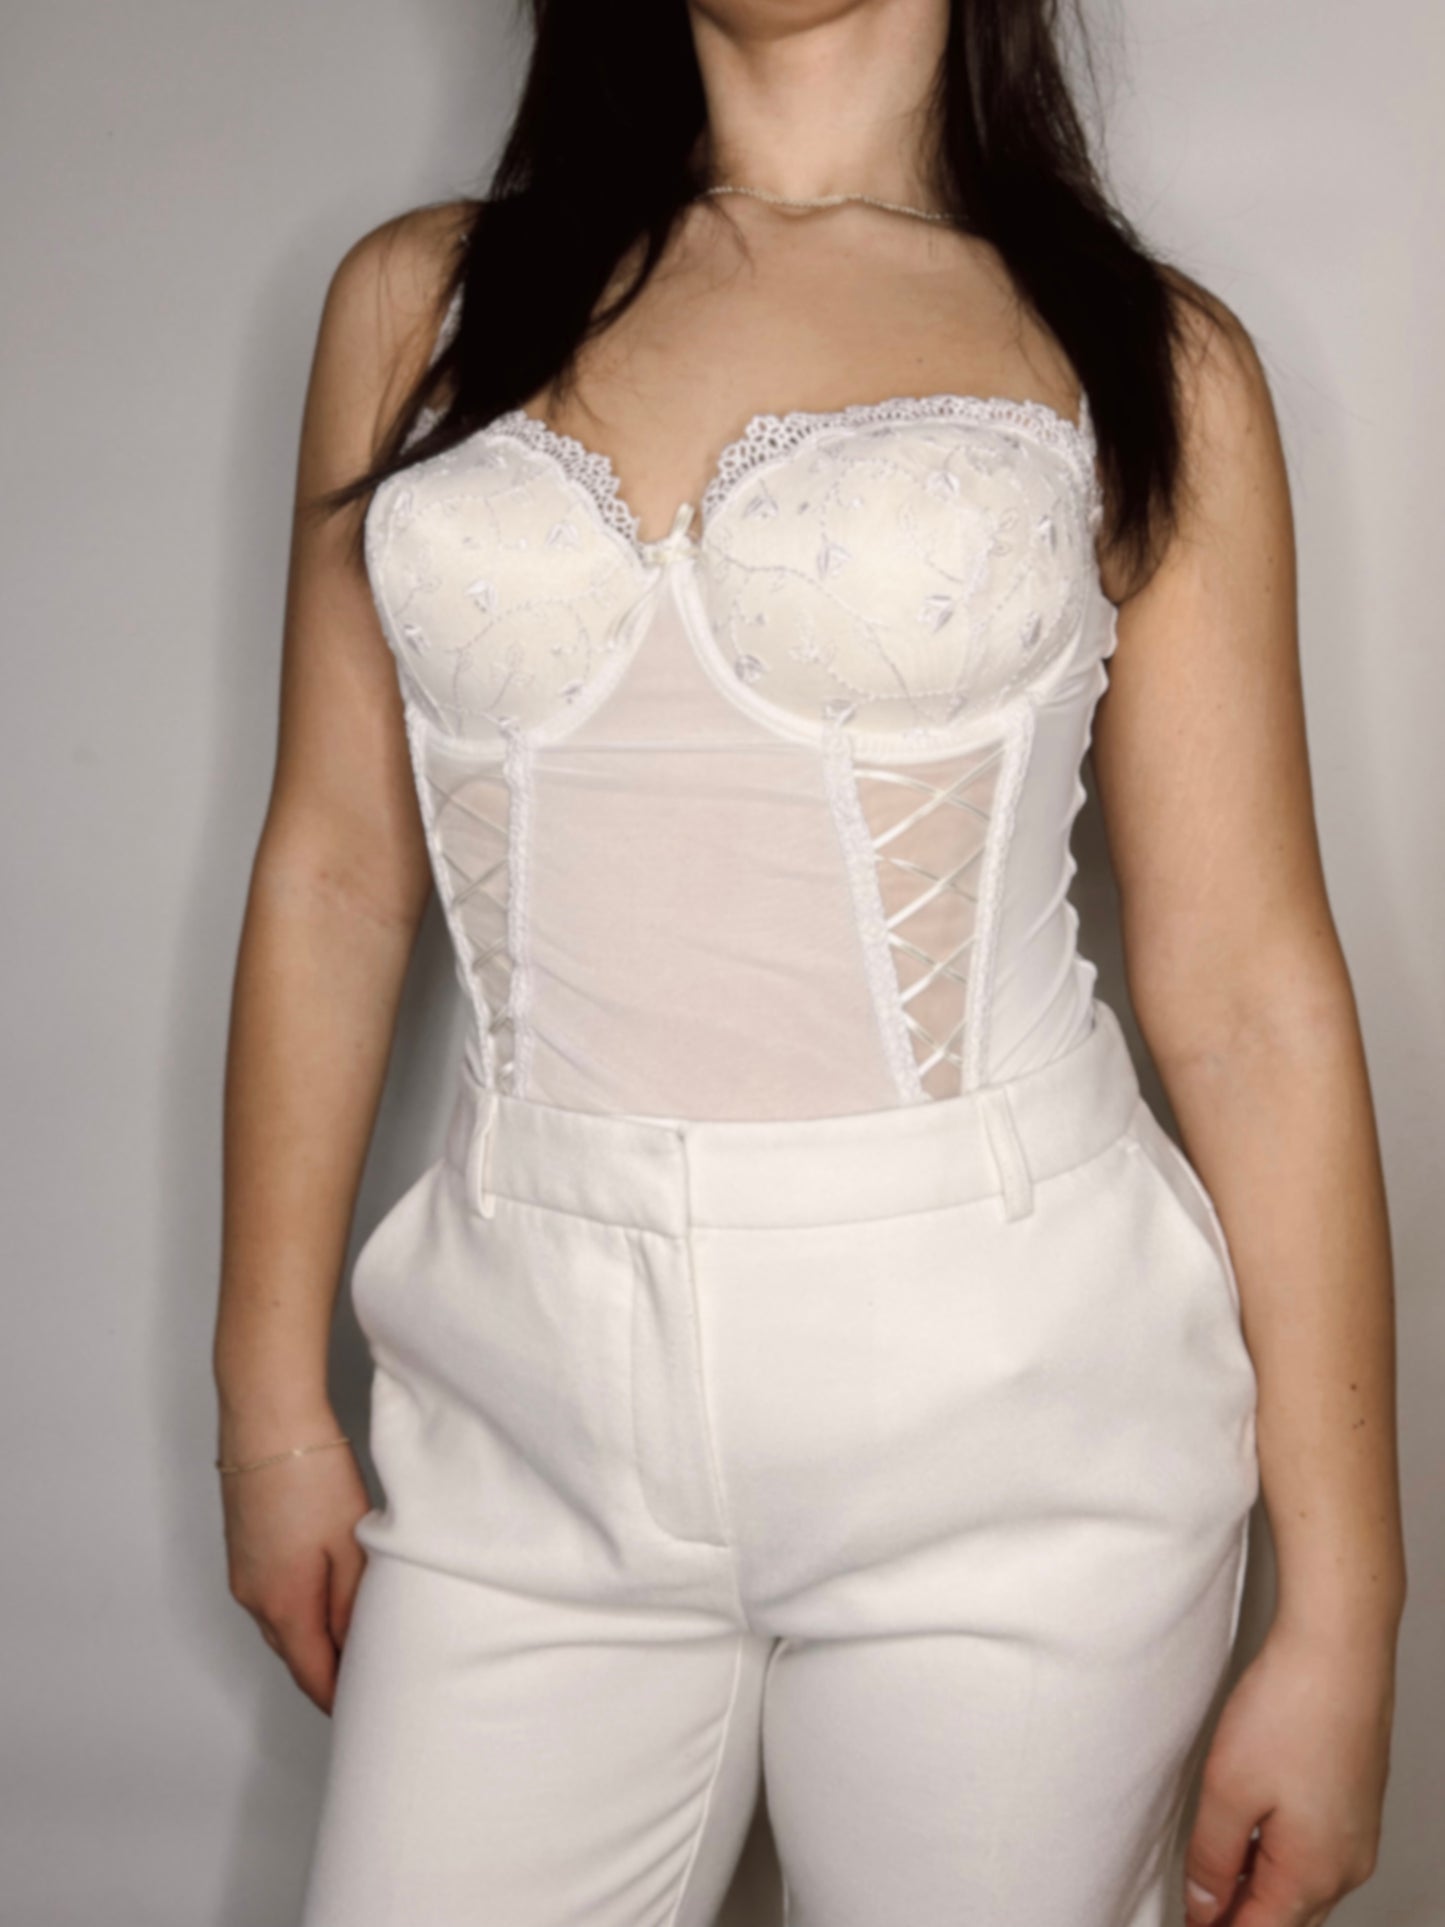 Vintage white corset top